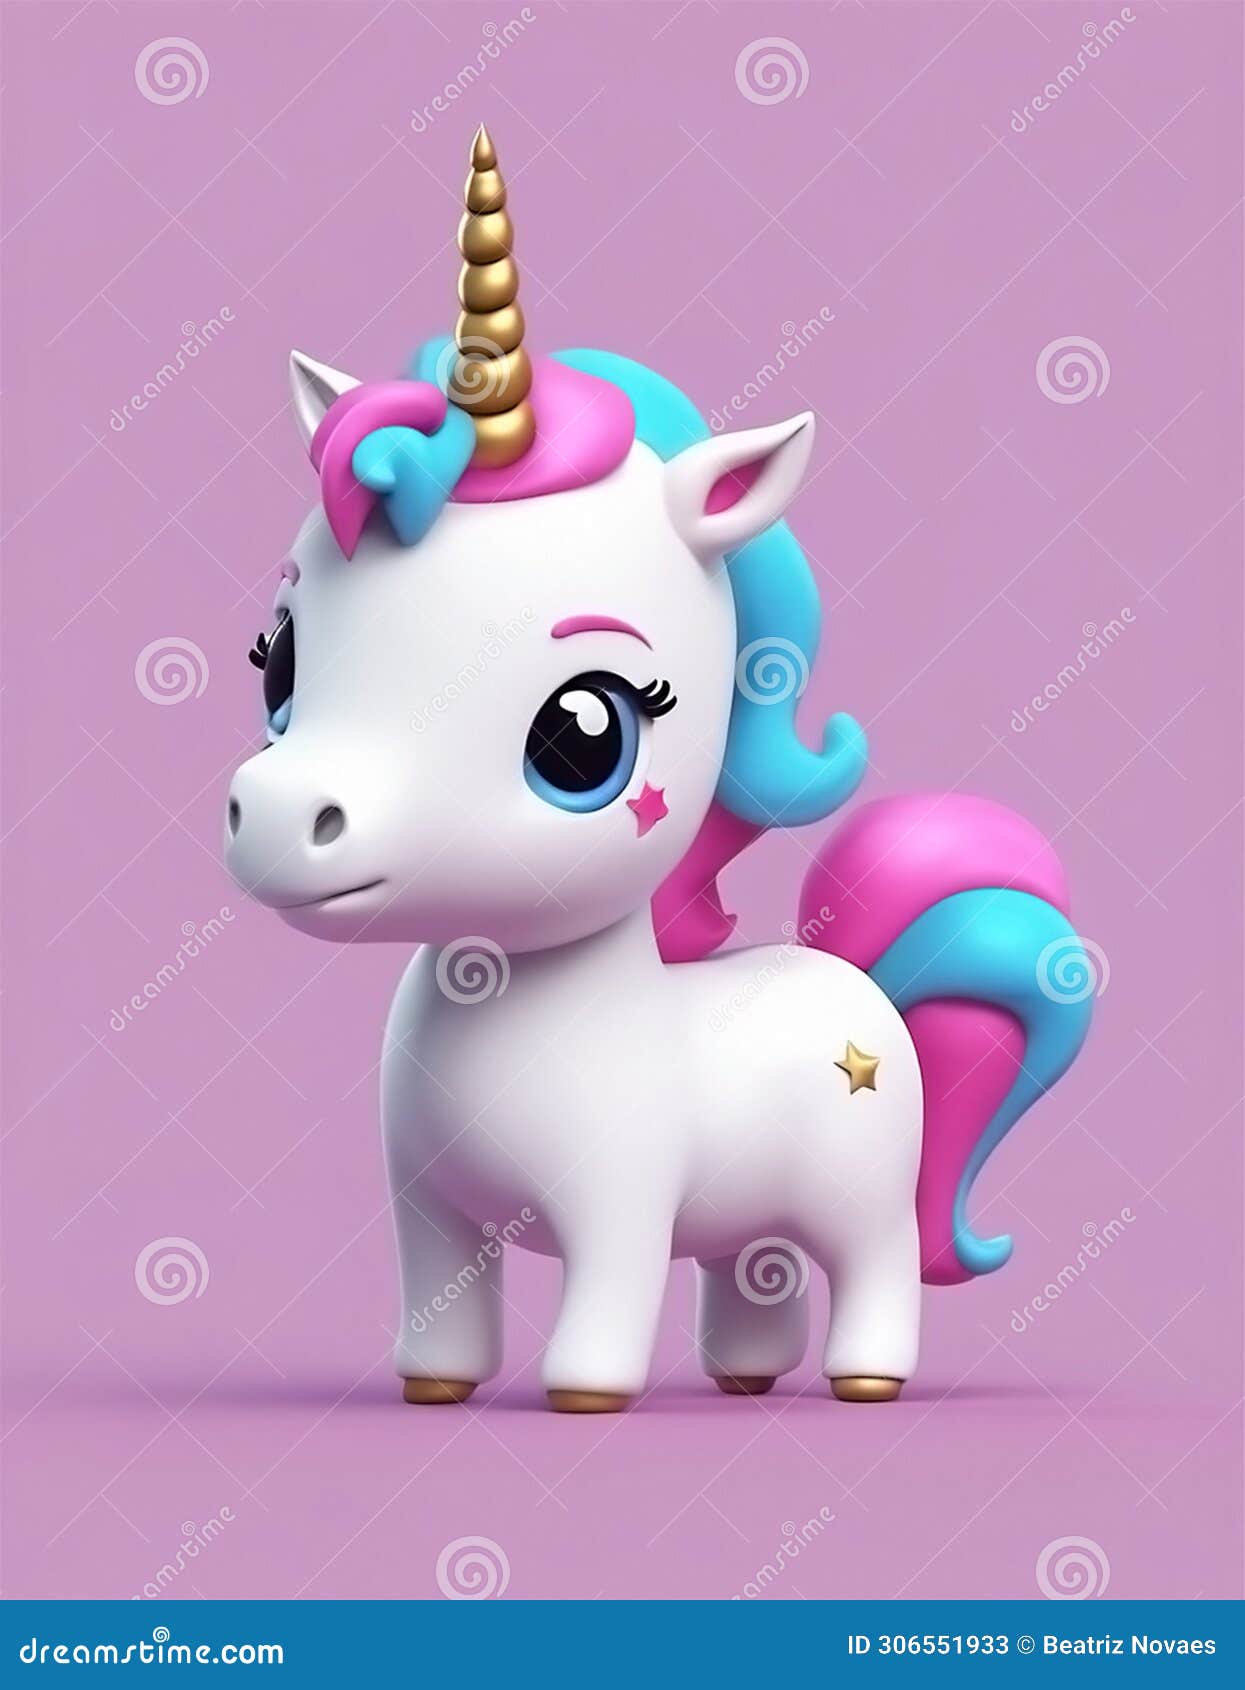 cute baby unicorn little animal 3d rendering cartoon character